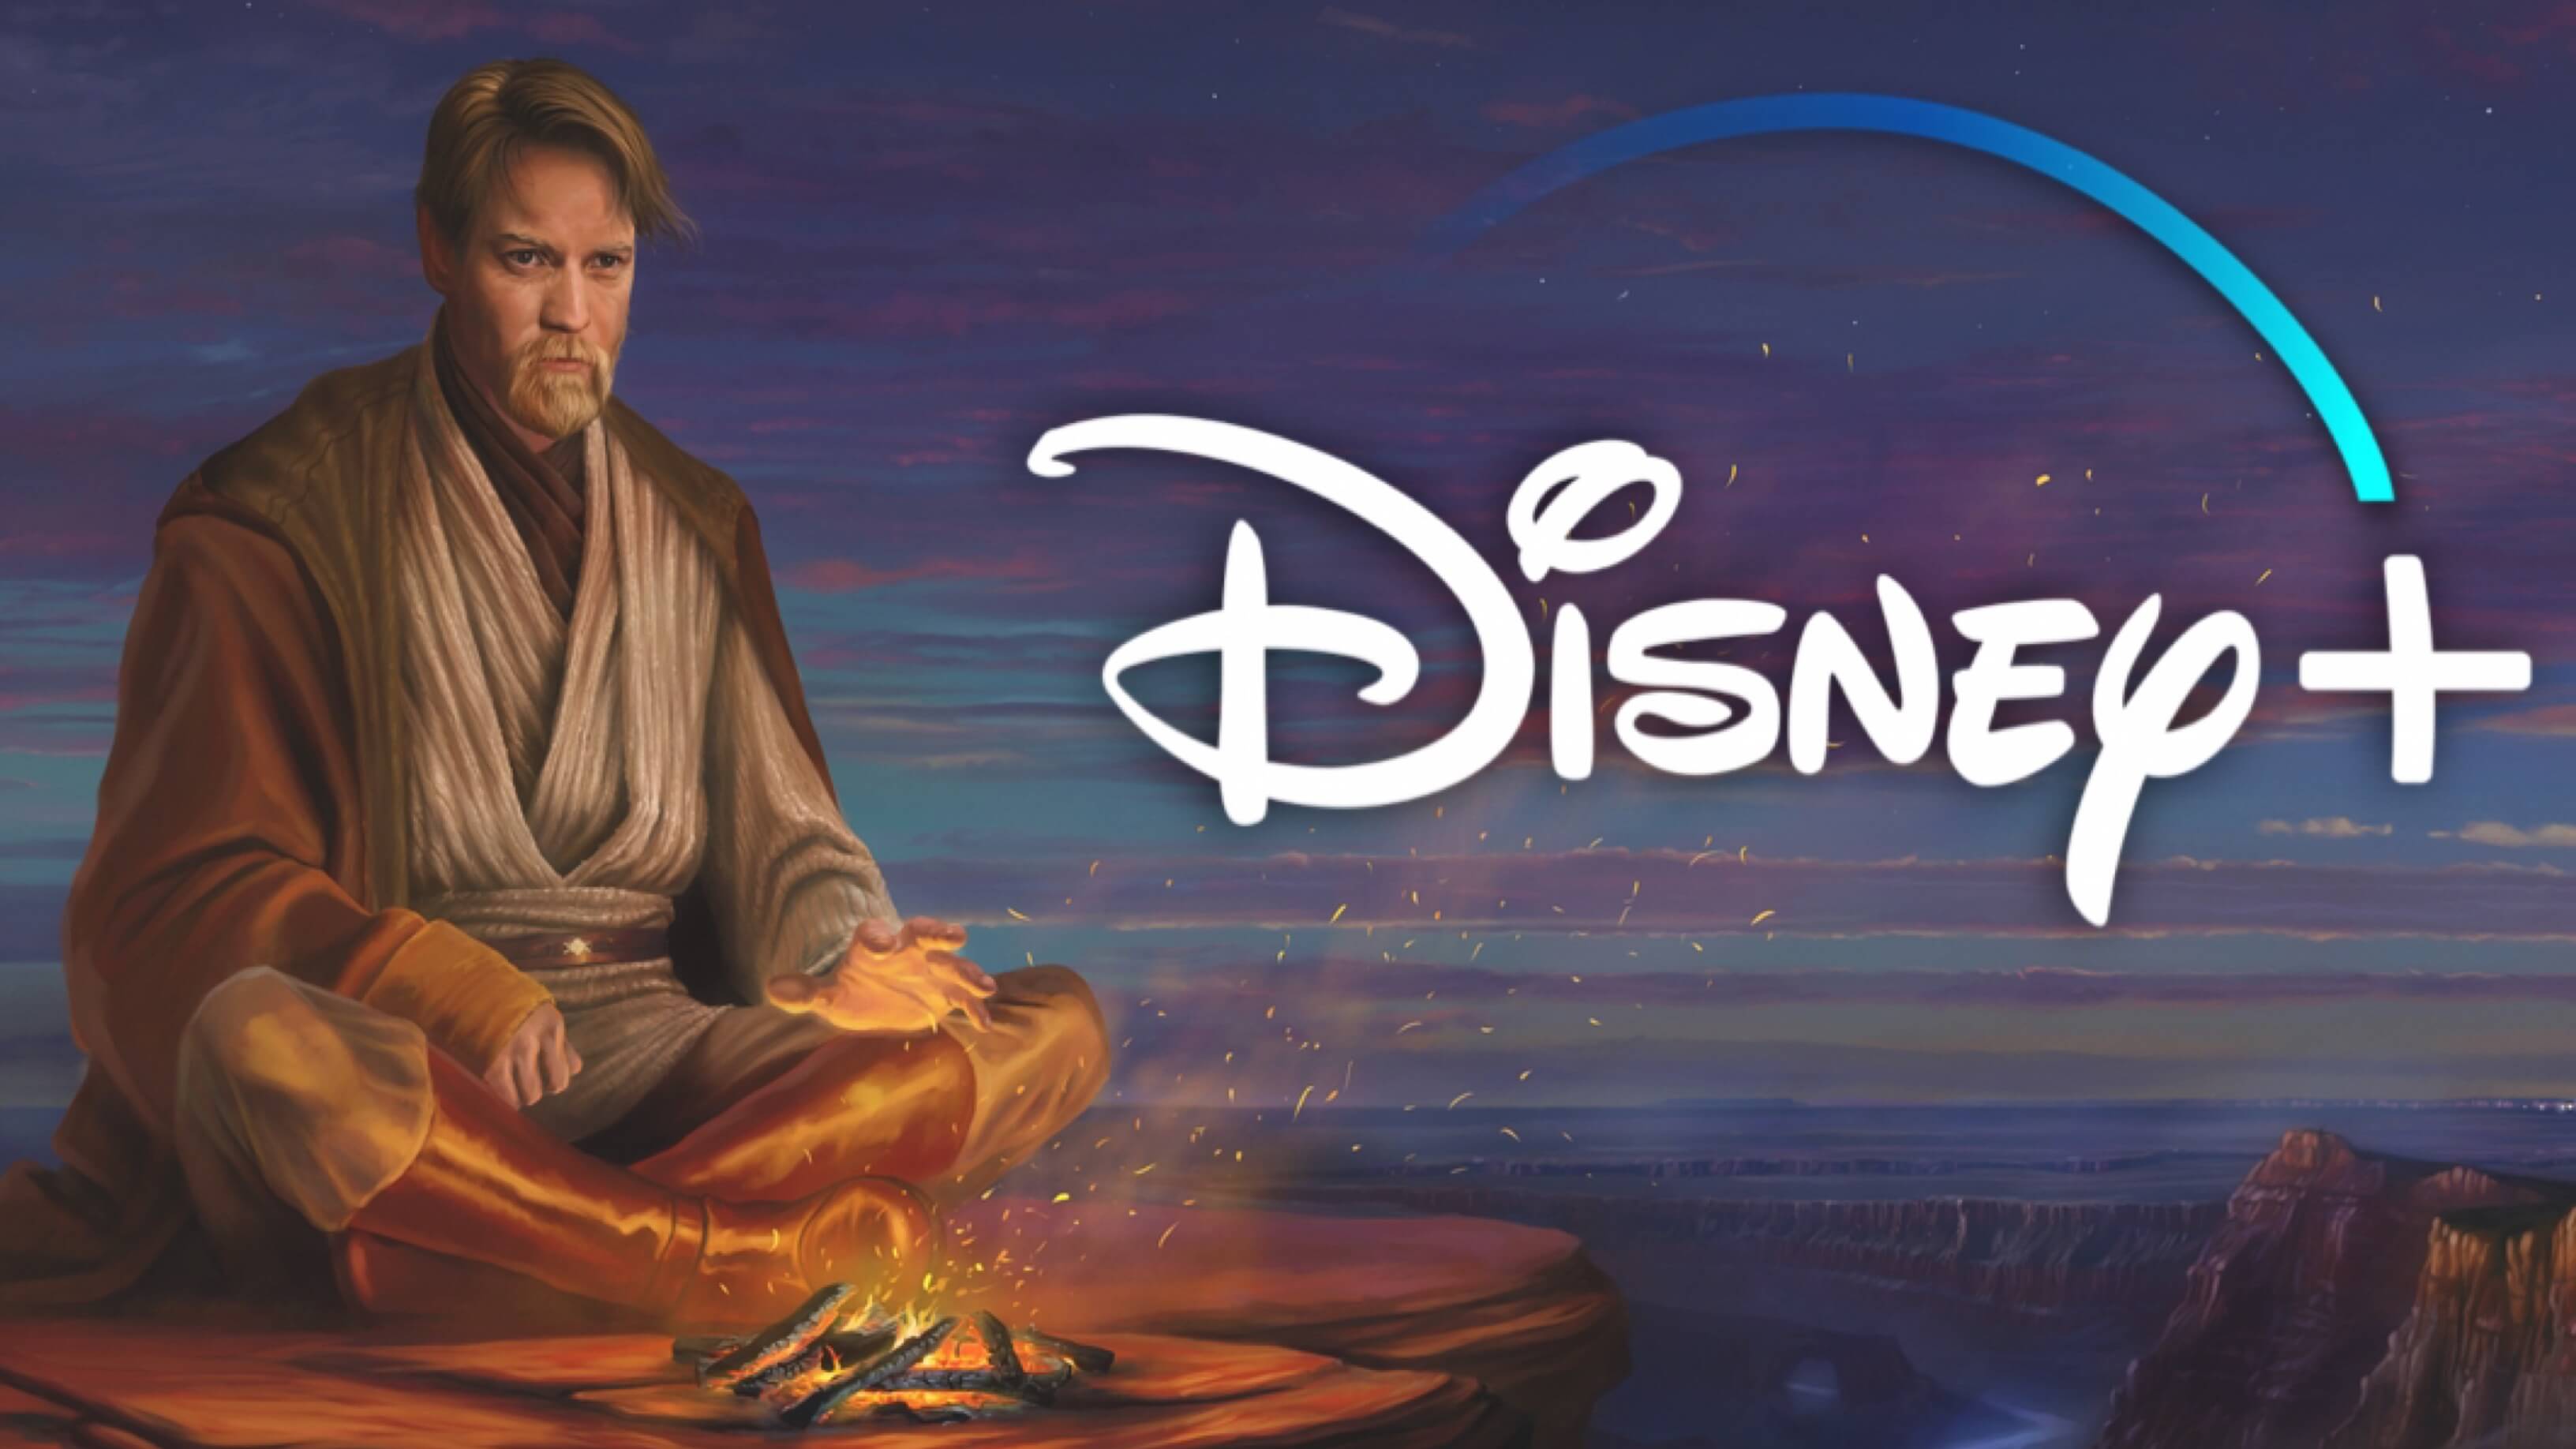 Obi-Wan Kenobi Disney+ Series to Reportedly Start Production in March